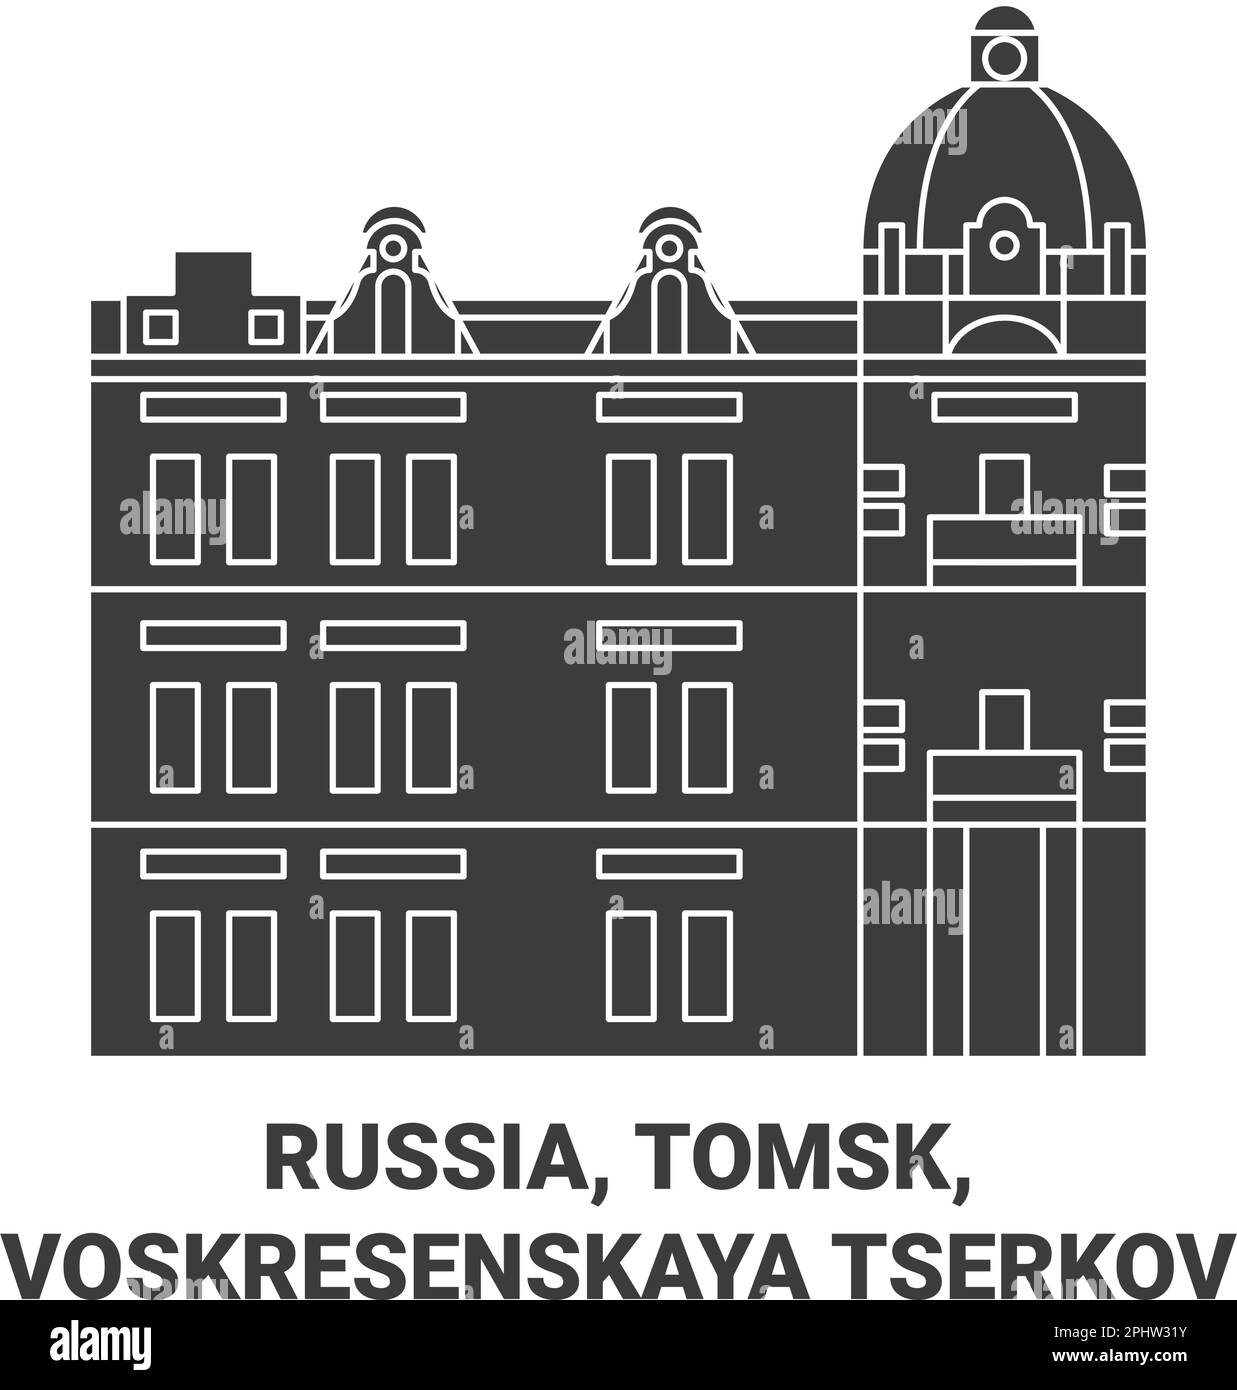 Russie, Tomsk, Voskresenskaya Tserkov voyage illustration vectorielle Illustration de Vecteur